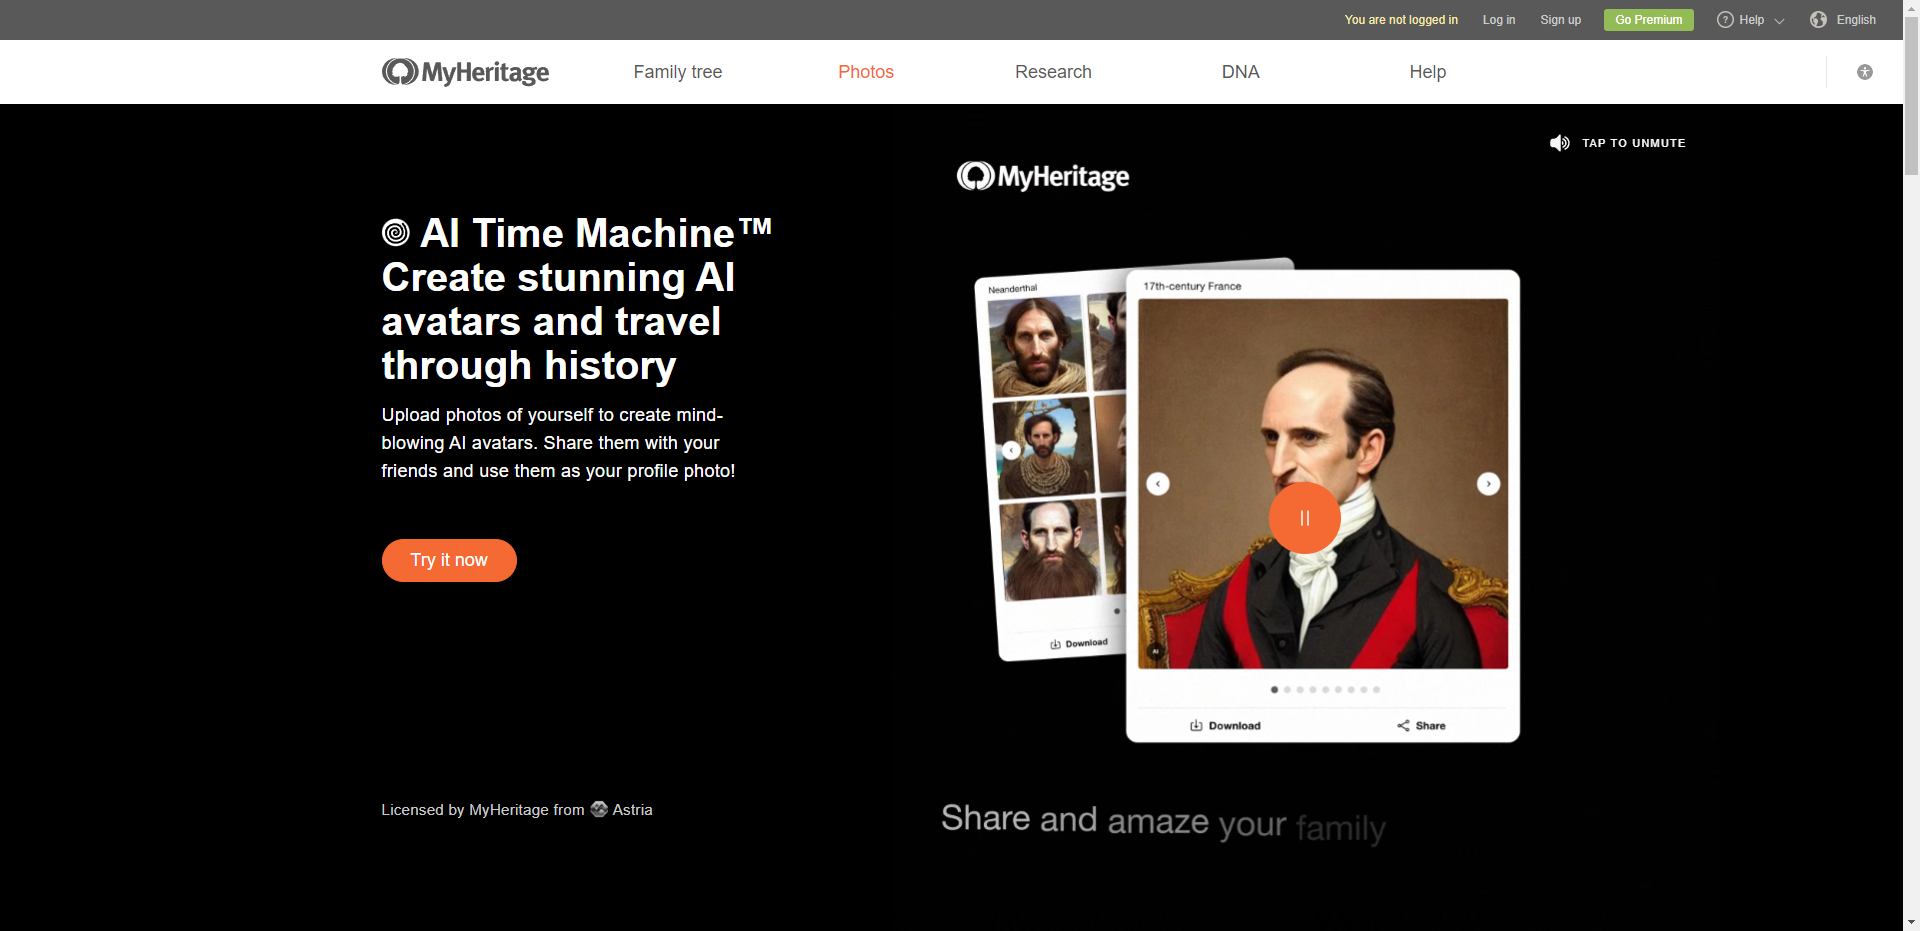 MyHeritage AI Time Machine™